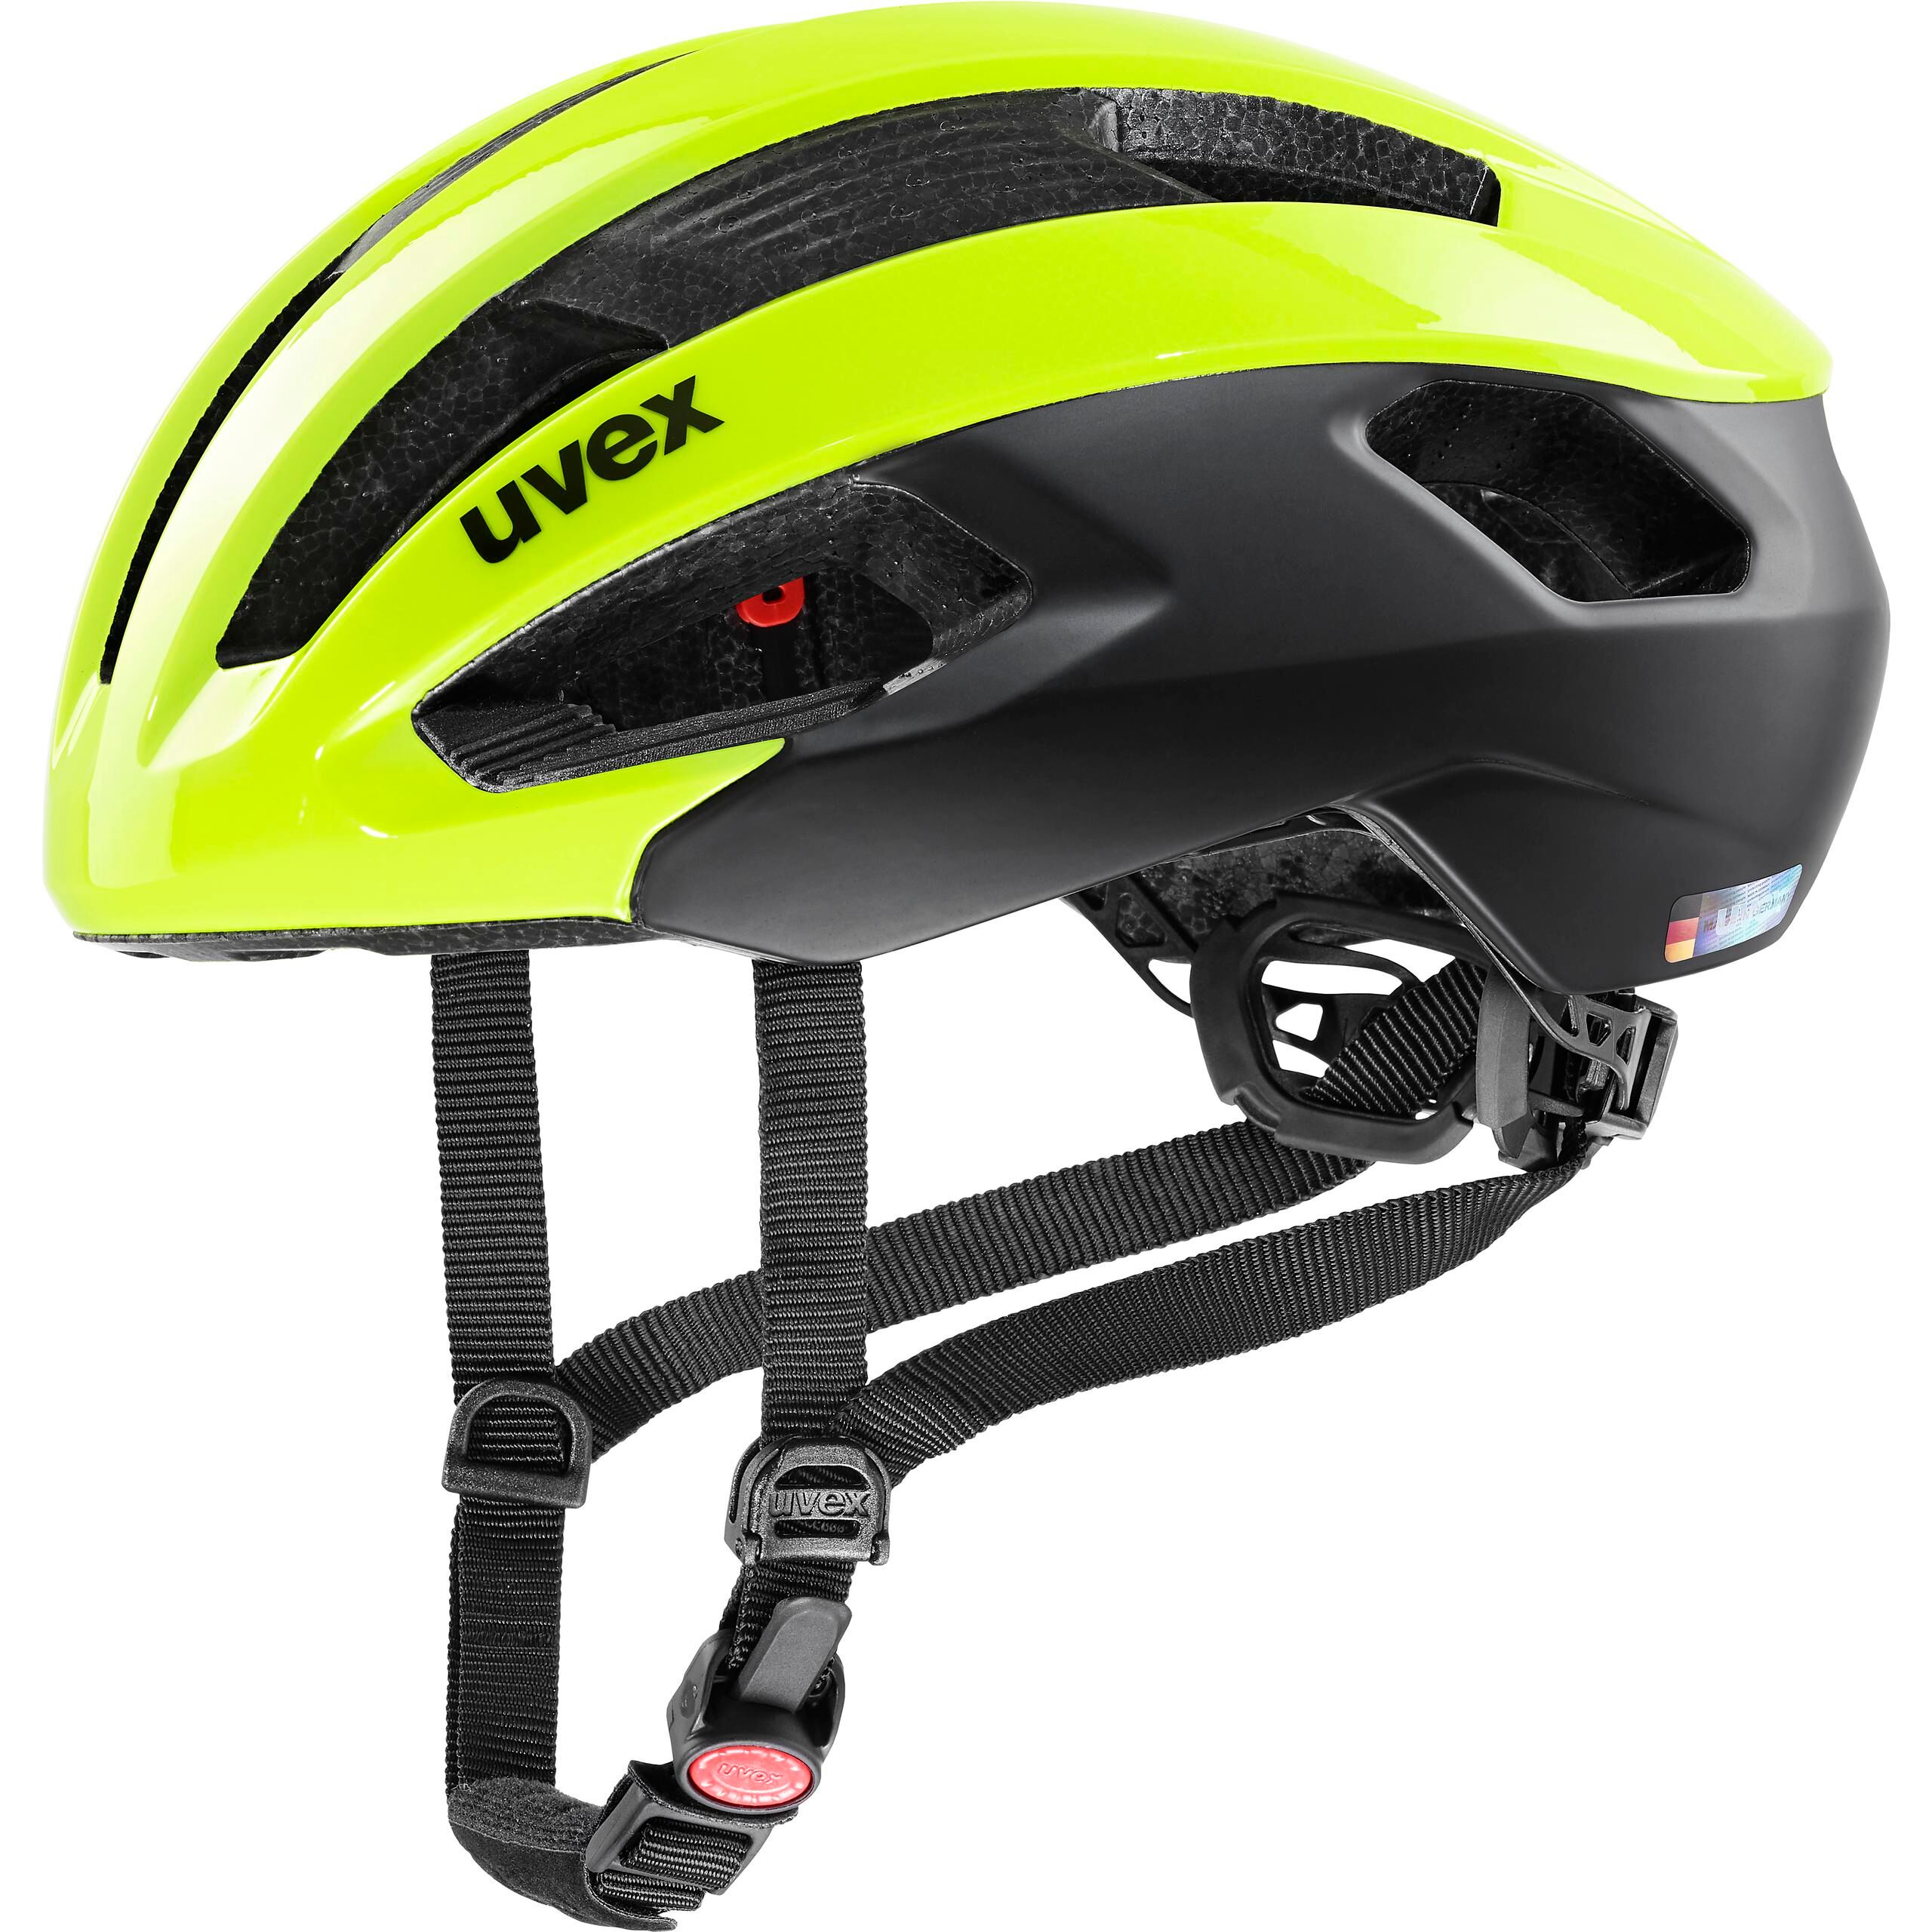 Uvex Rise Cc - Road bike helmet